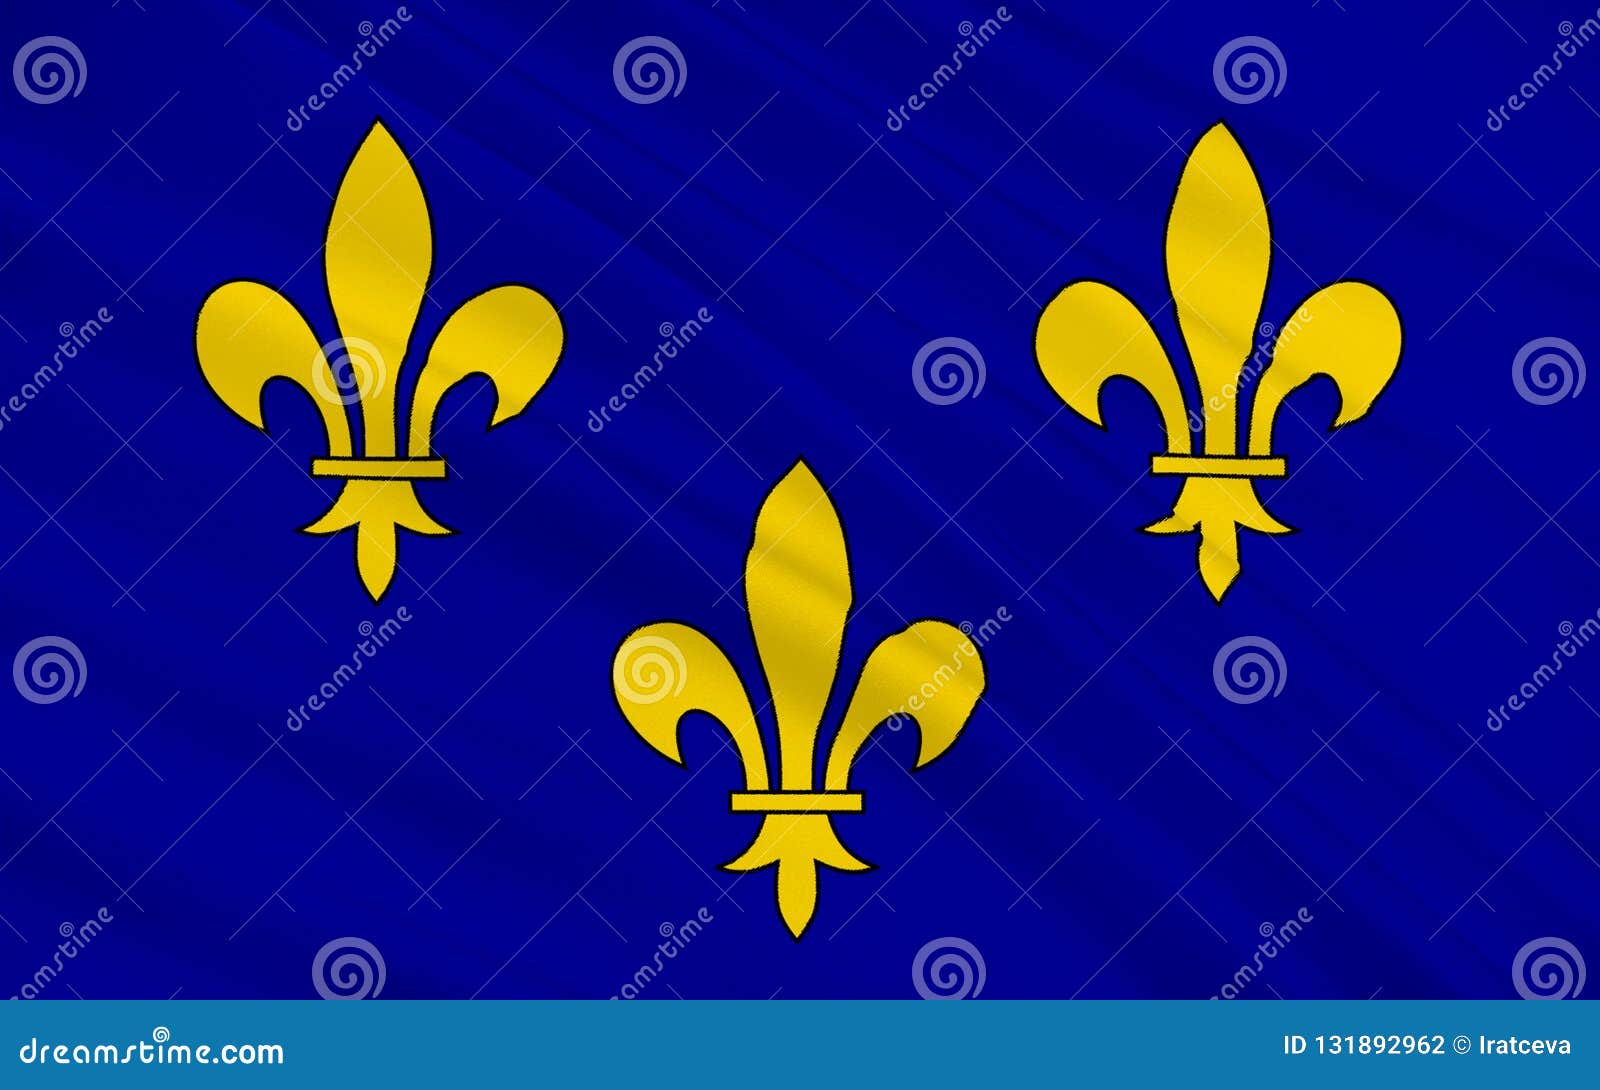 flag of ile-de-france, france